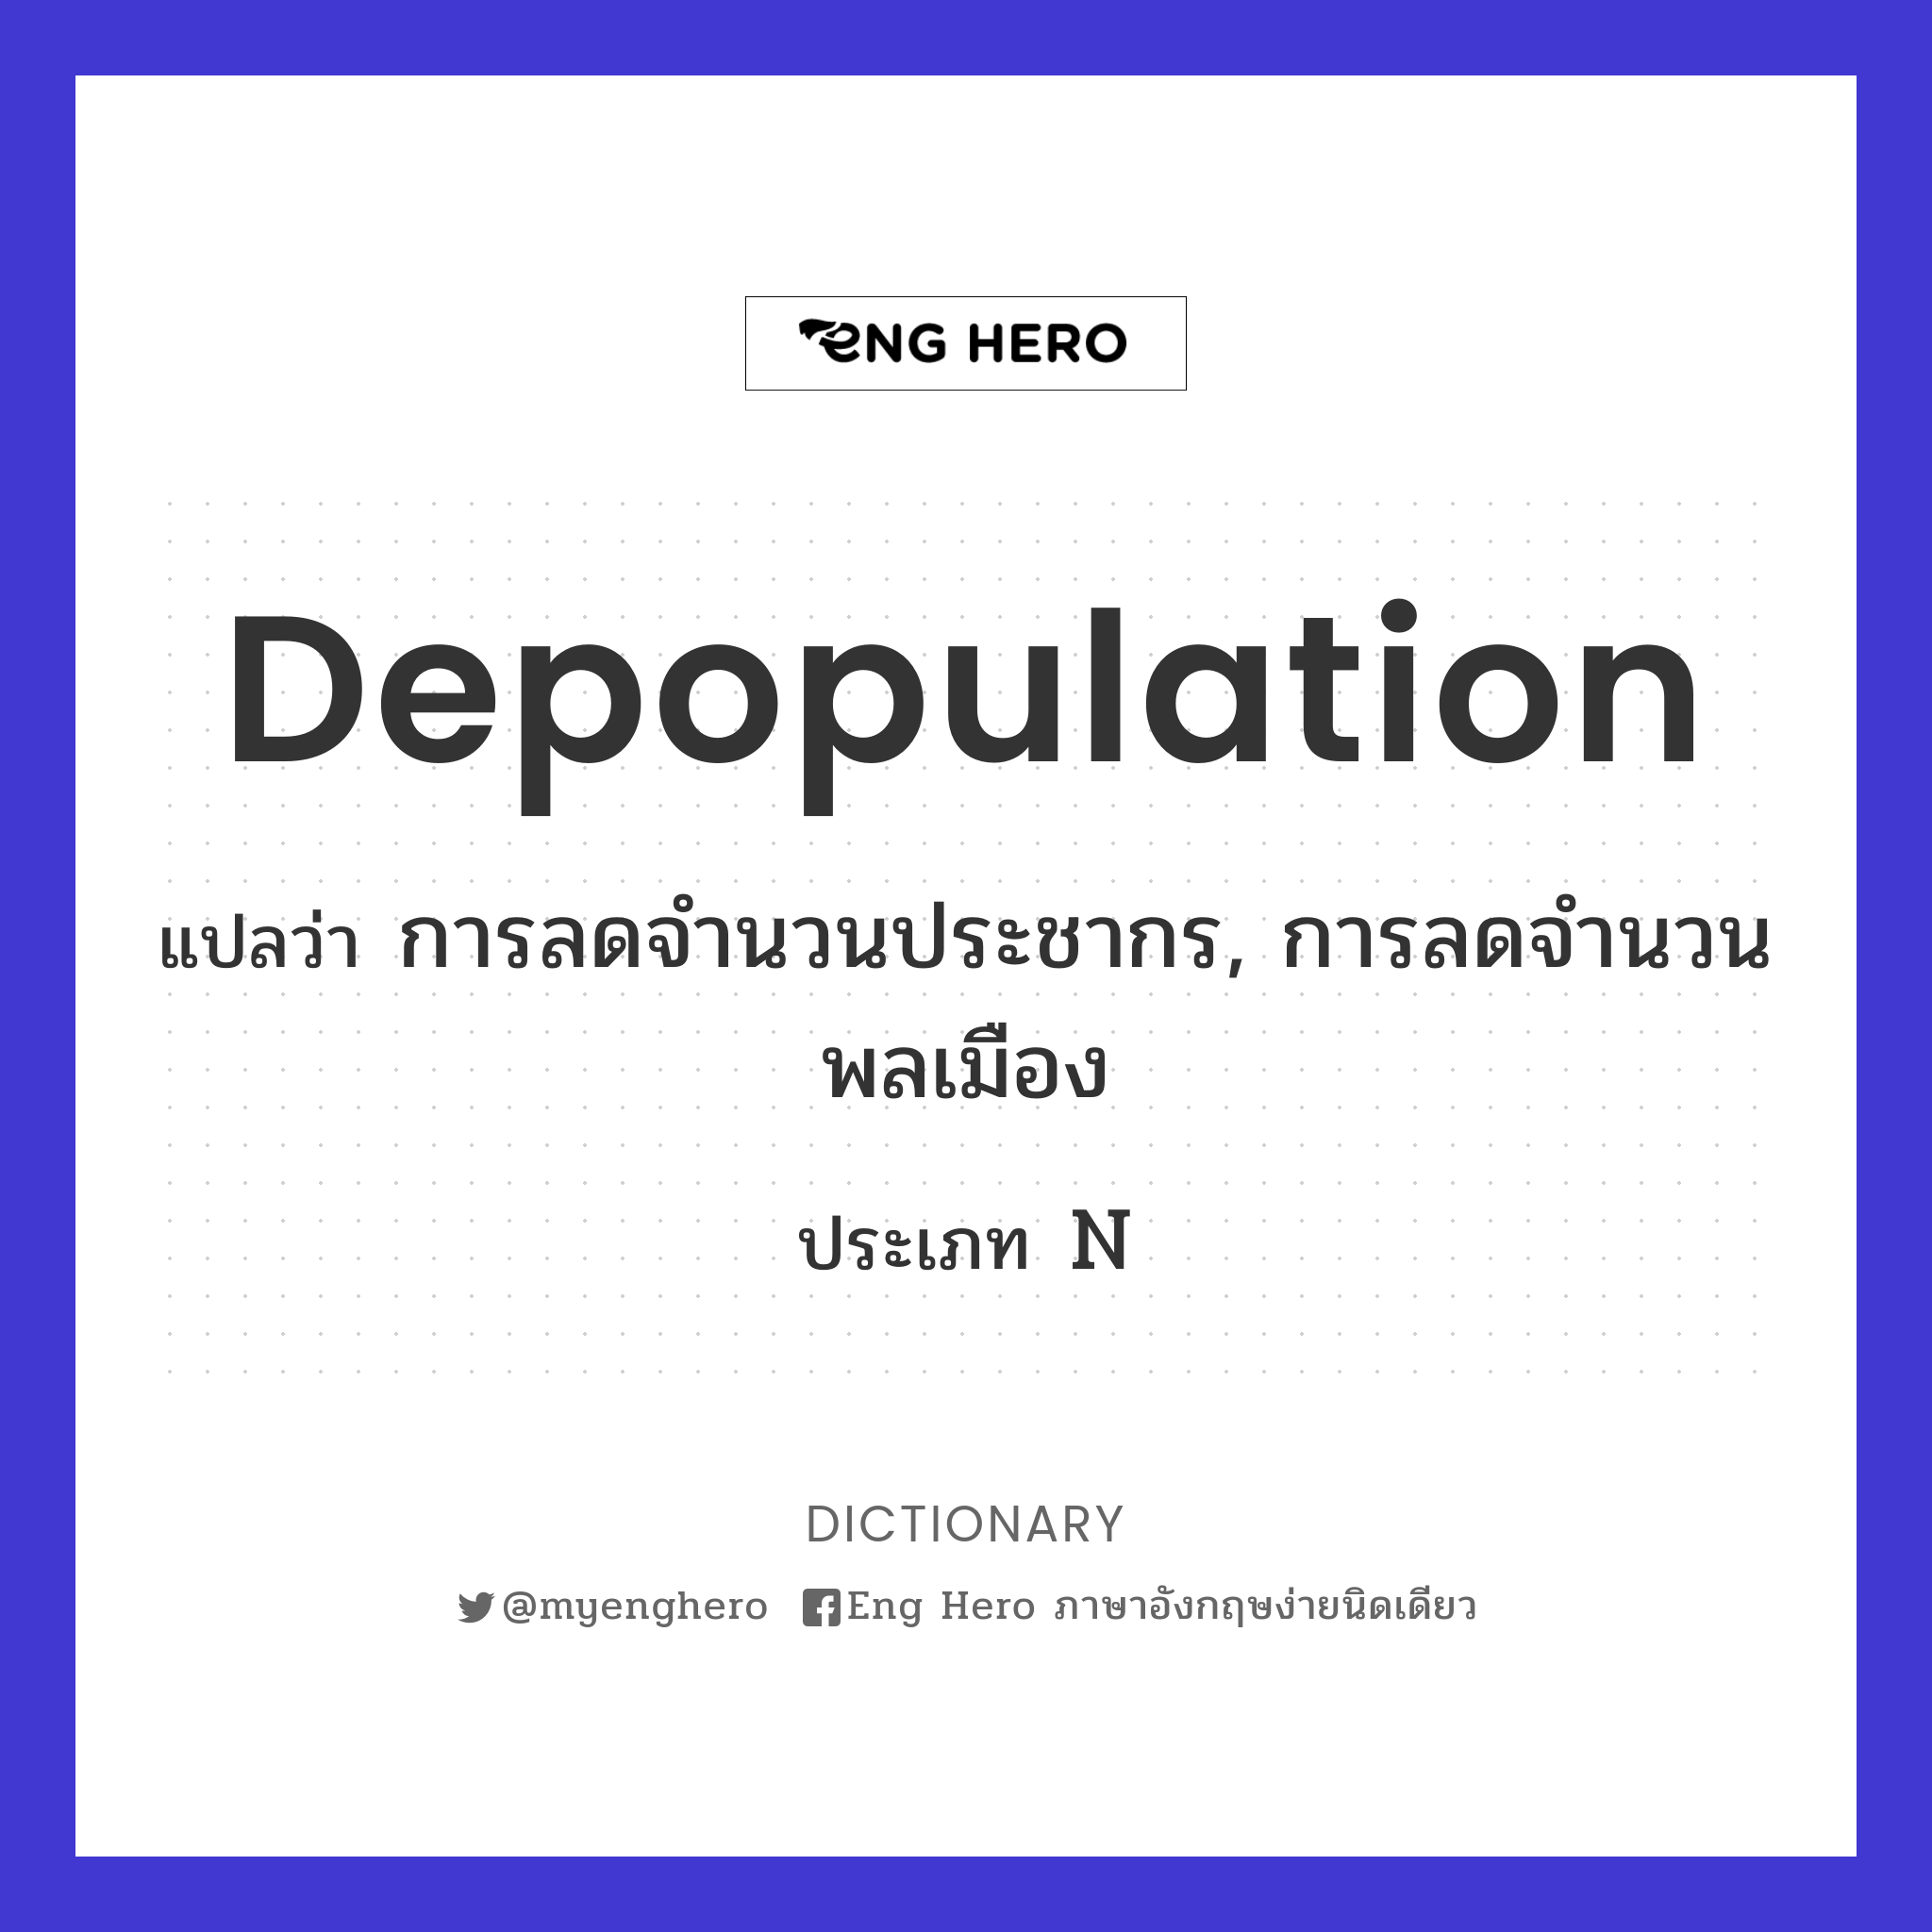 depopulation